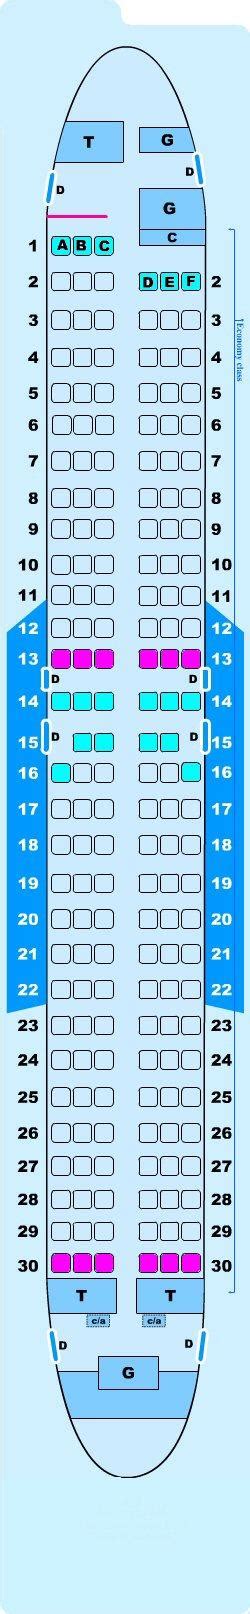 seating capacity of 737-800